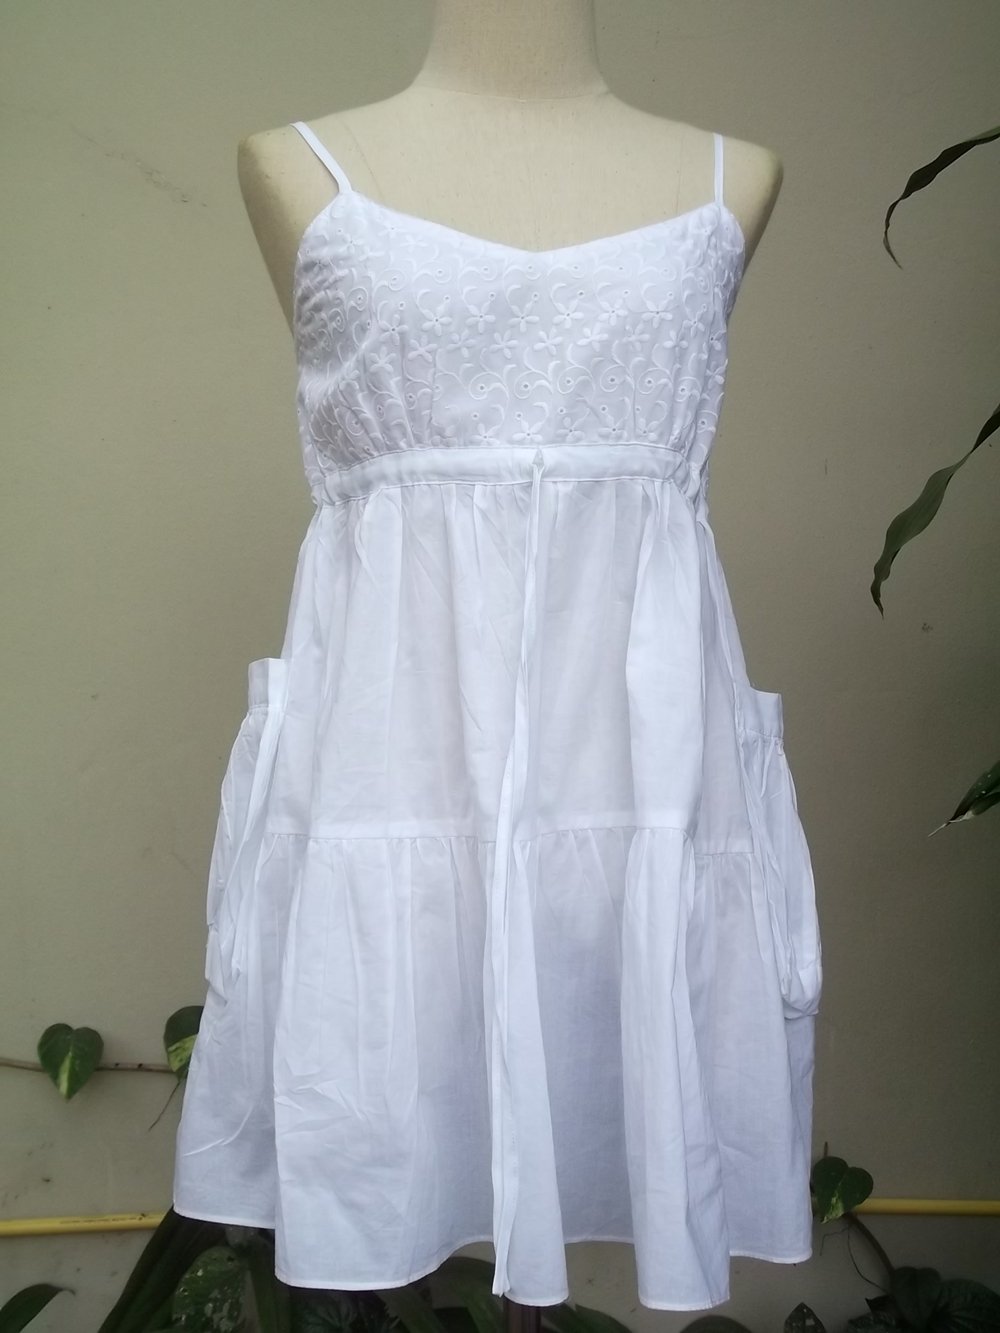 White Cotton Spaghetti Straps Top / Mini Dress (size L / 12-14)